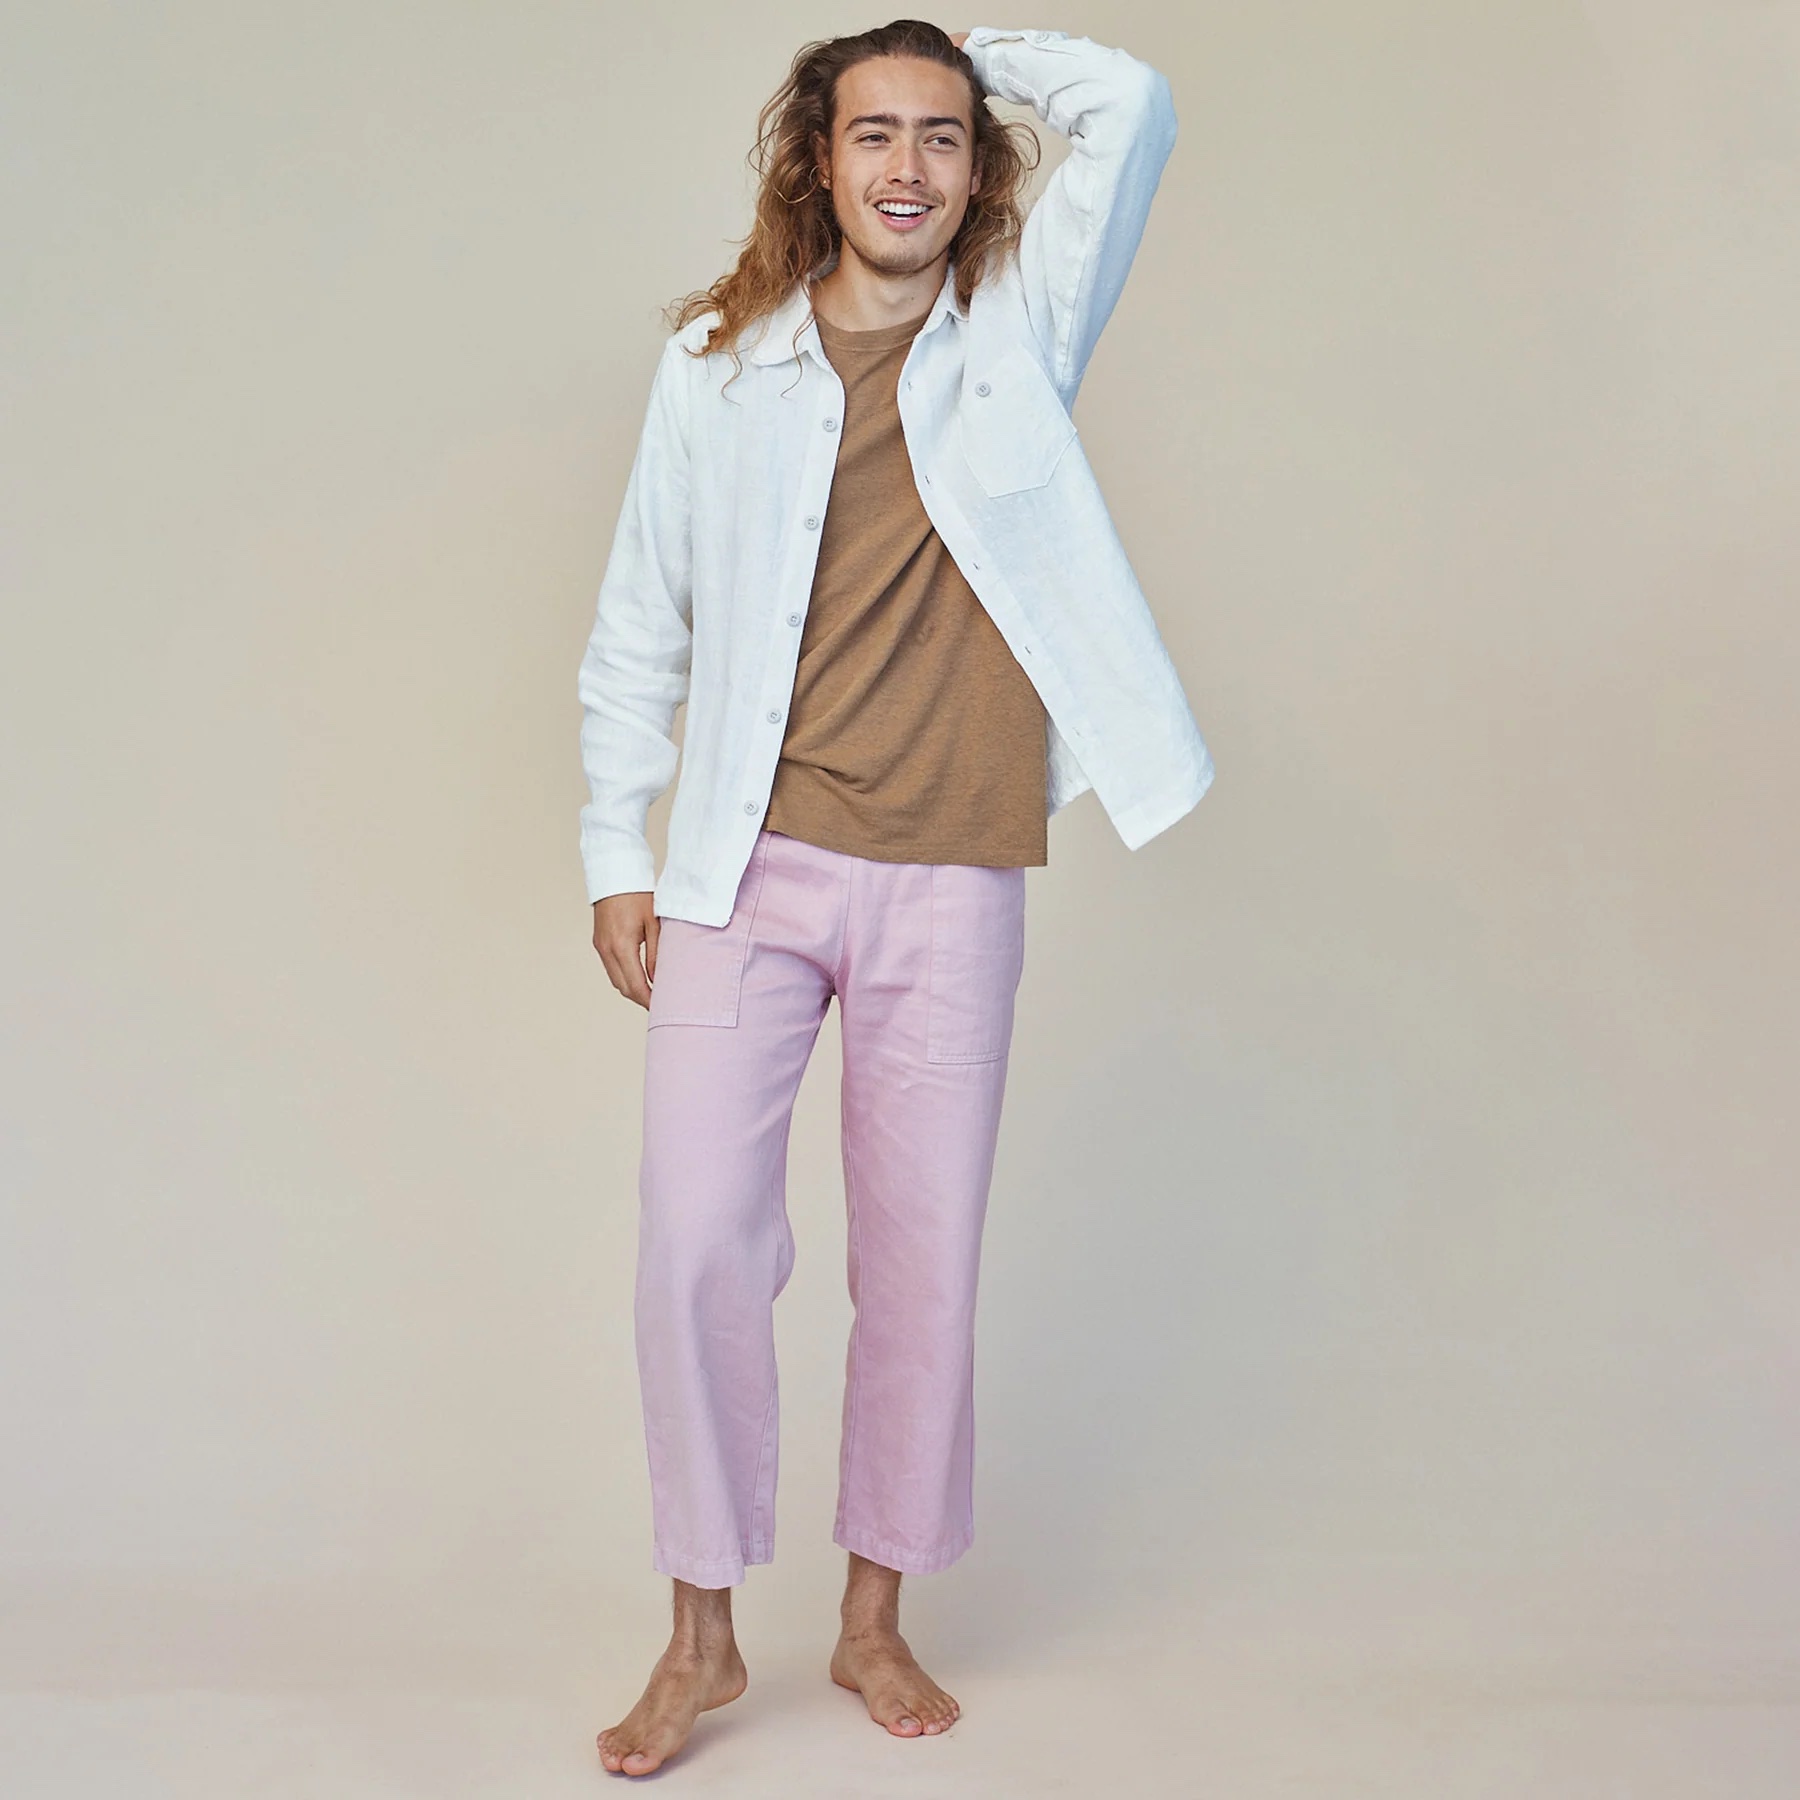 A model wearing Jungmaven lavender hemp pants runs his hand through his hair.